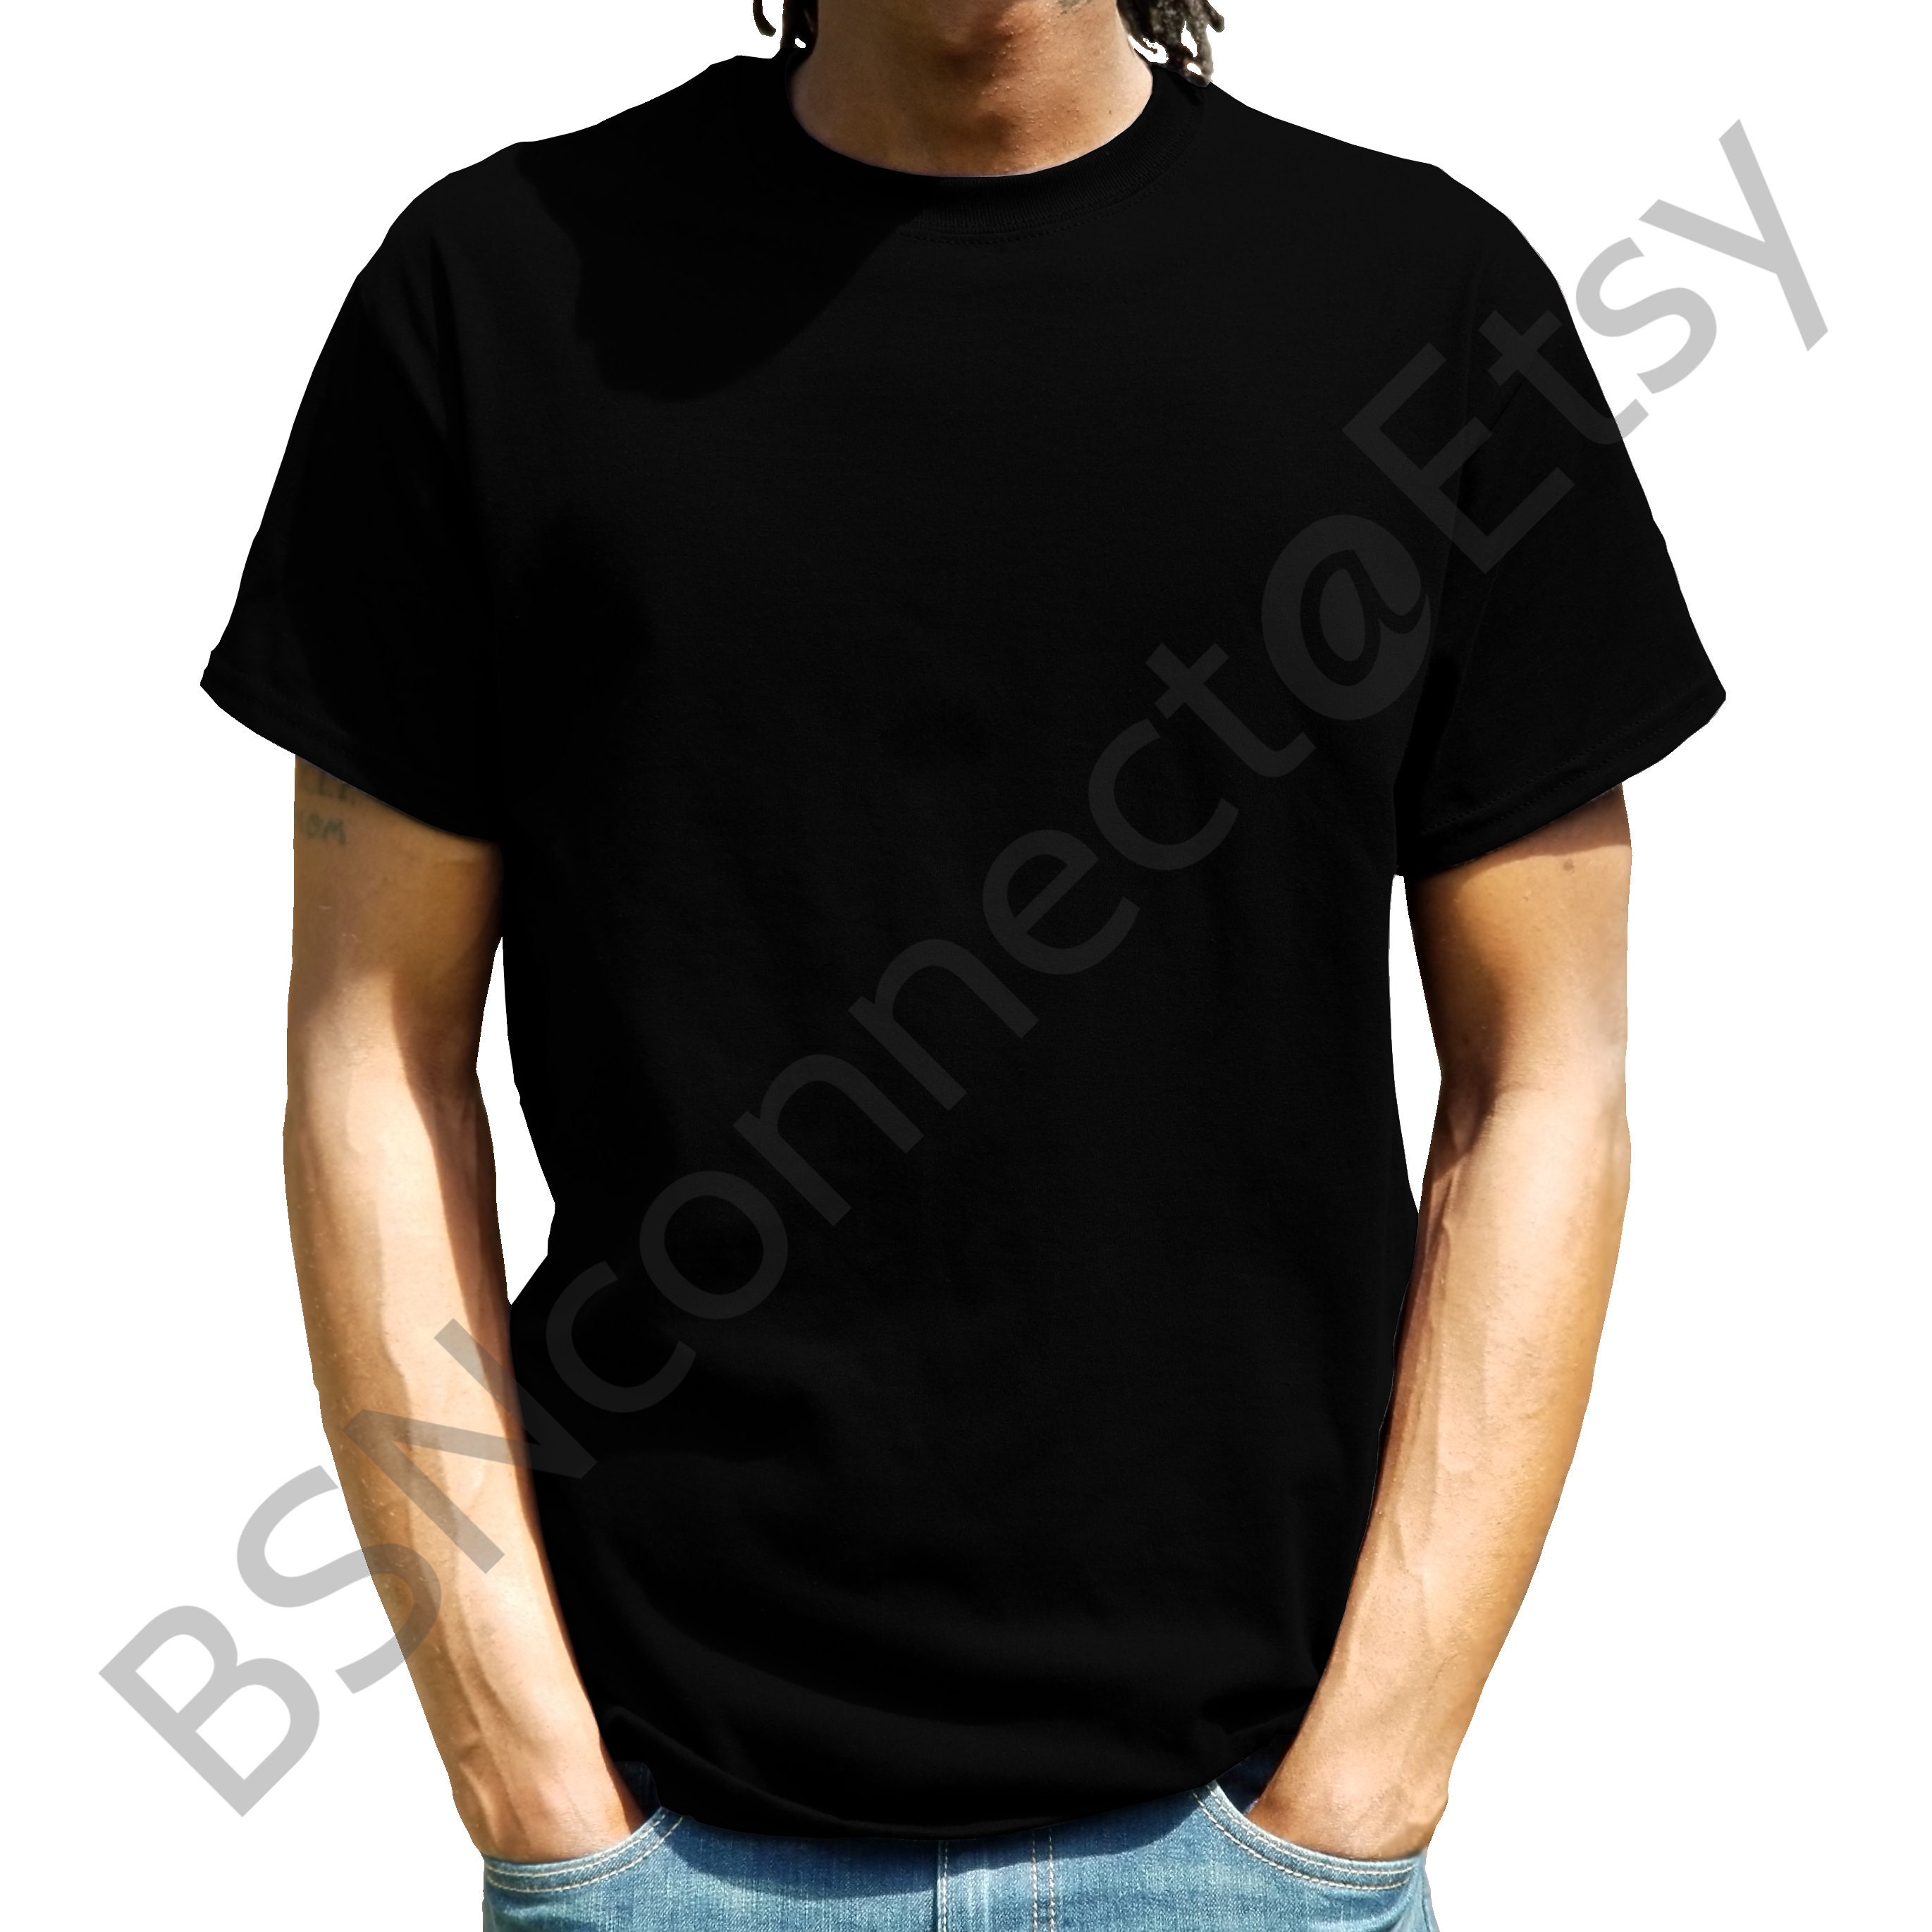 Download T Shirt Mockup Blank Black T Shirt Blanks Black Model Male ...